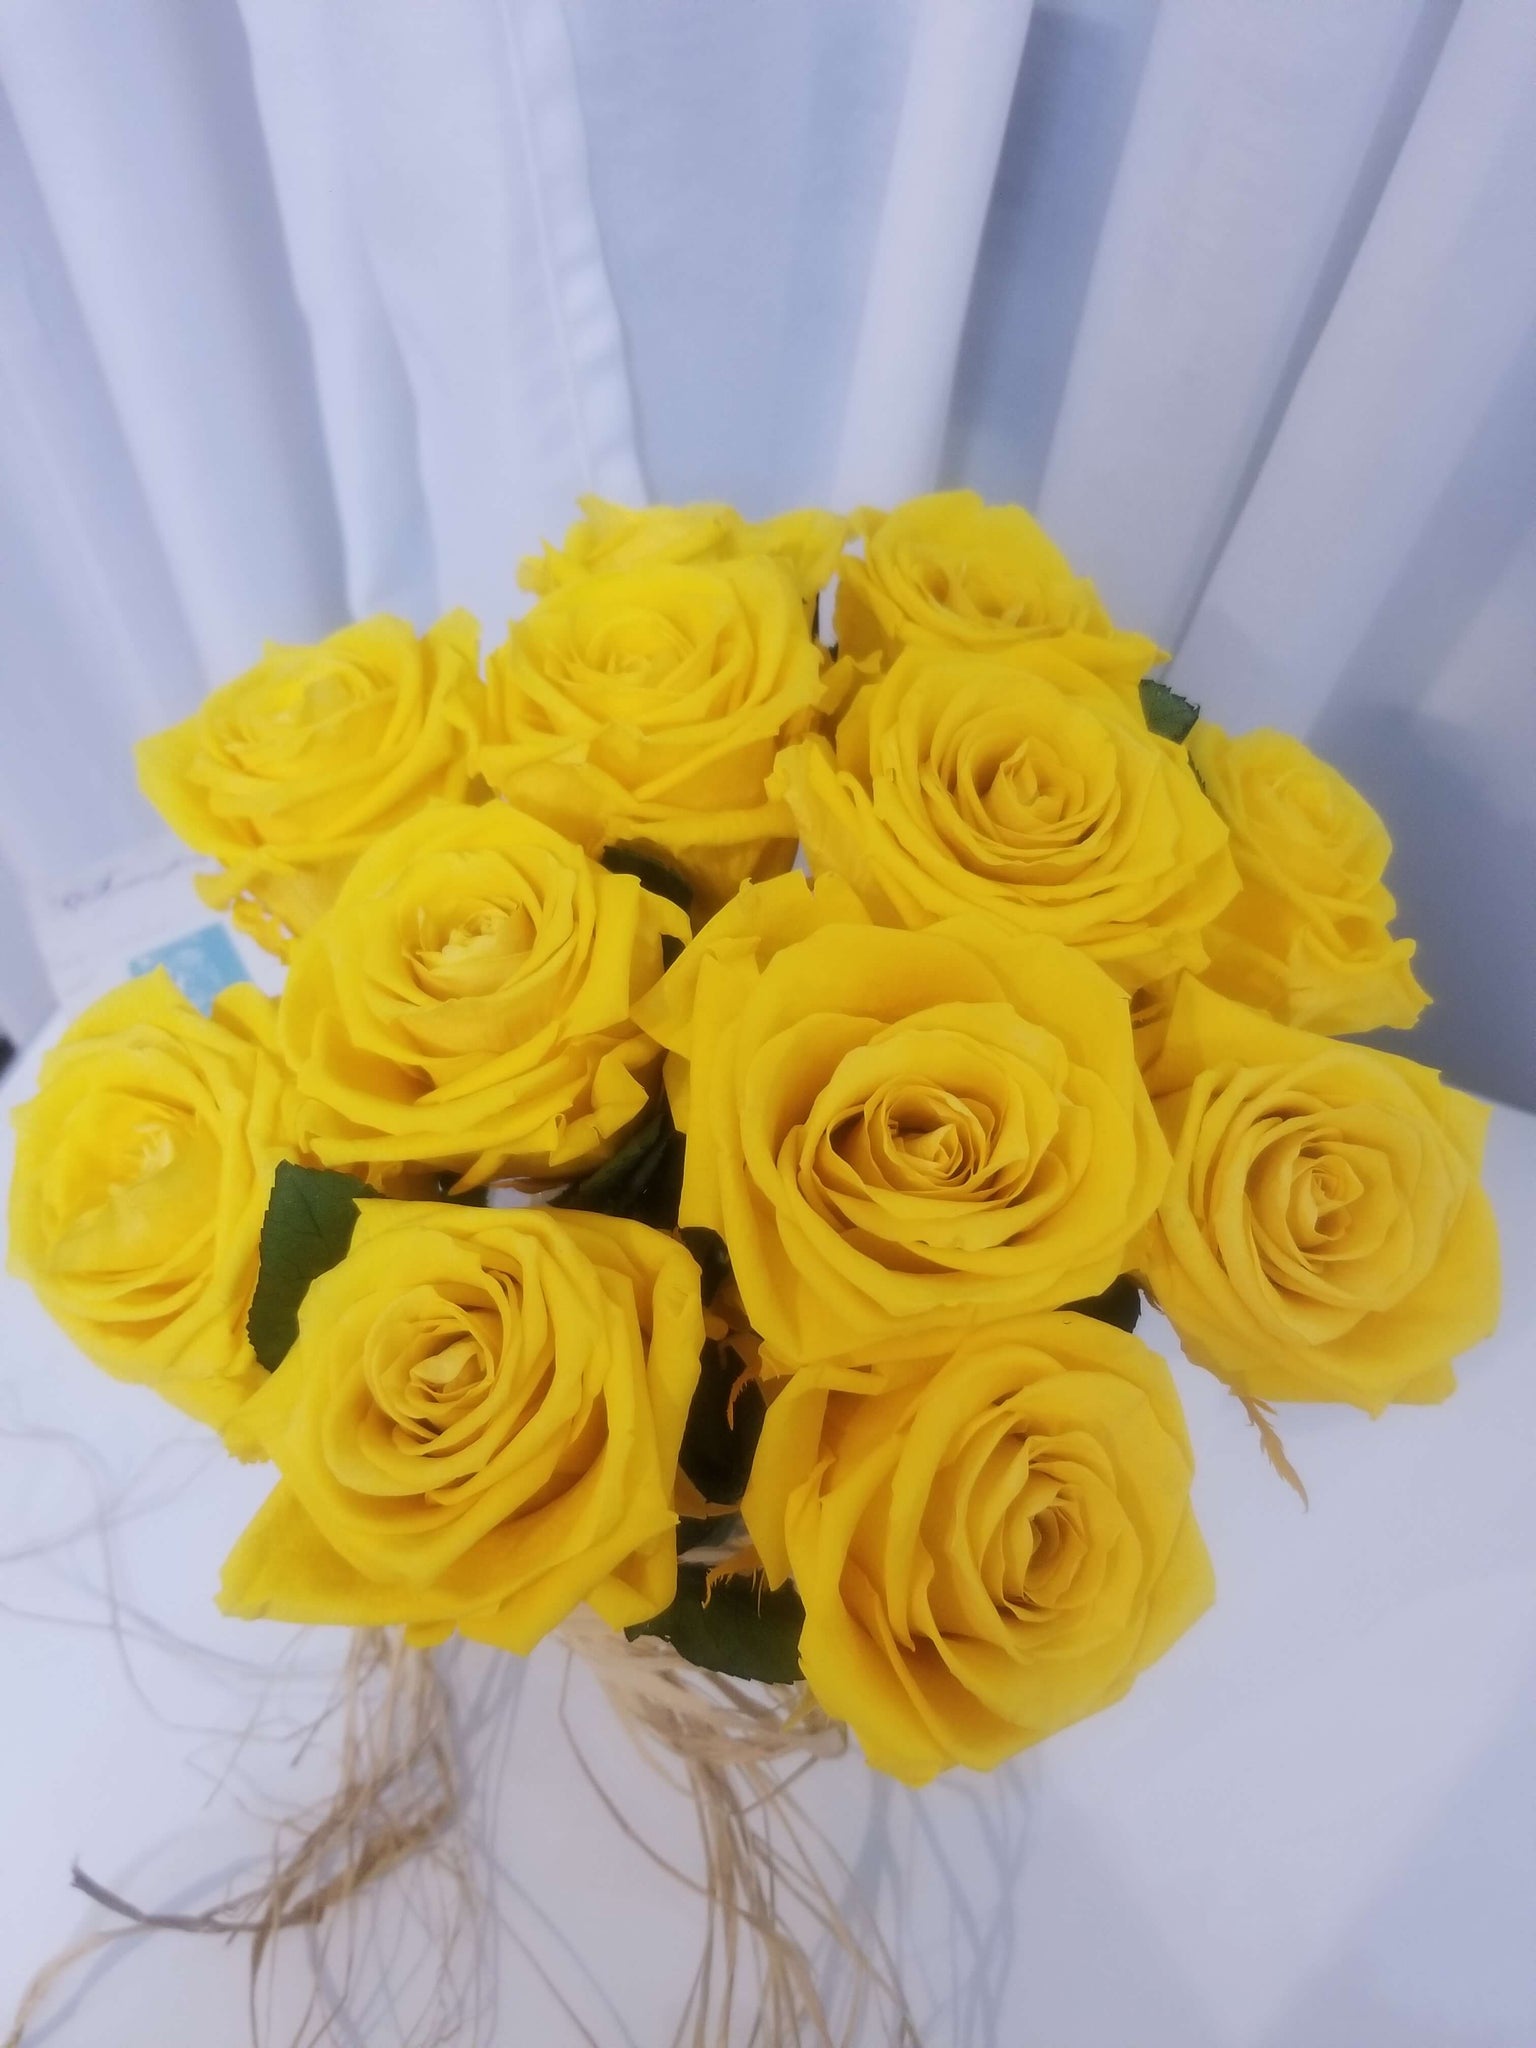 Rosé Designs 1 Dozen Short Stem Yellow Roses in Clear Vase